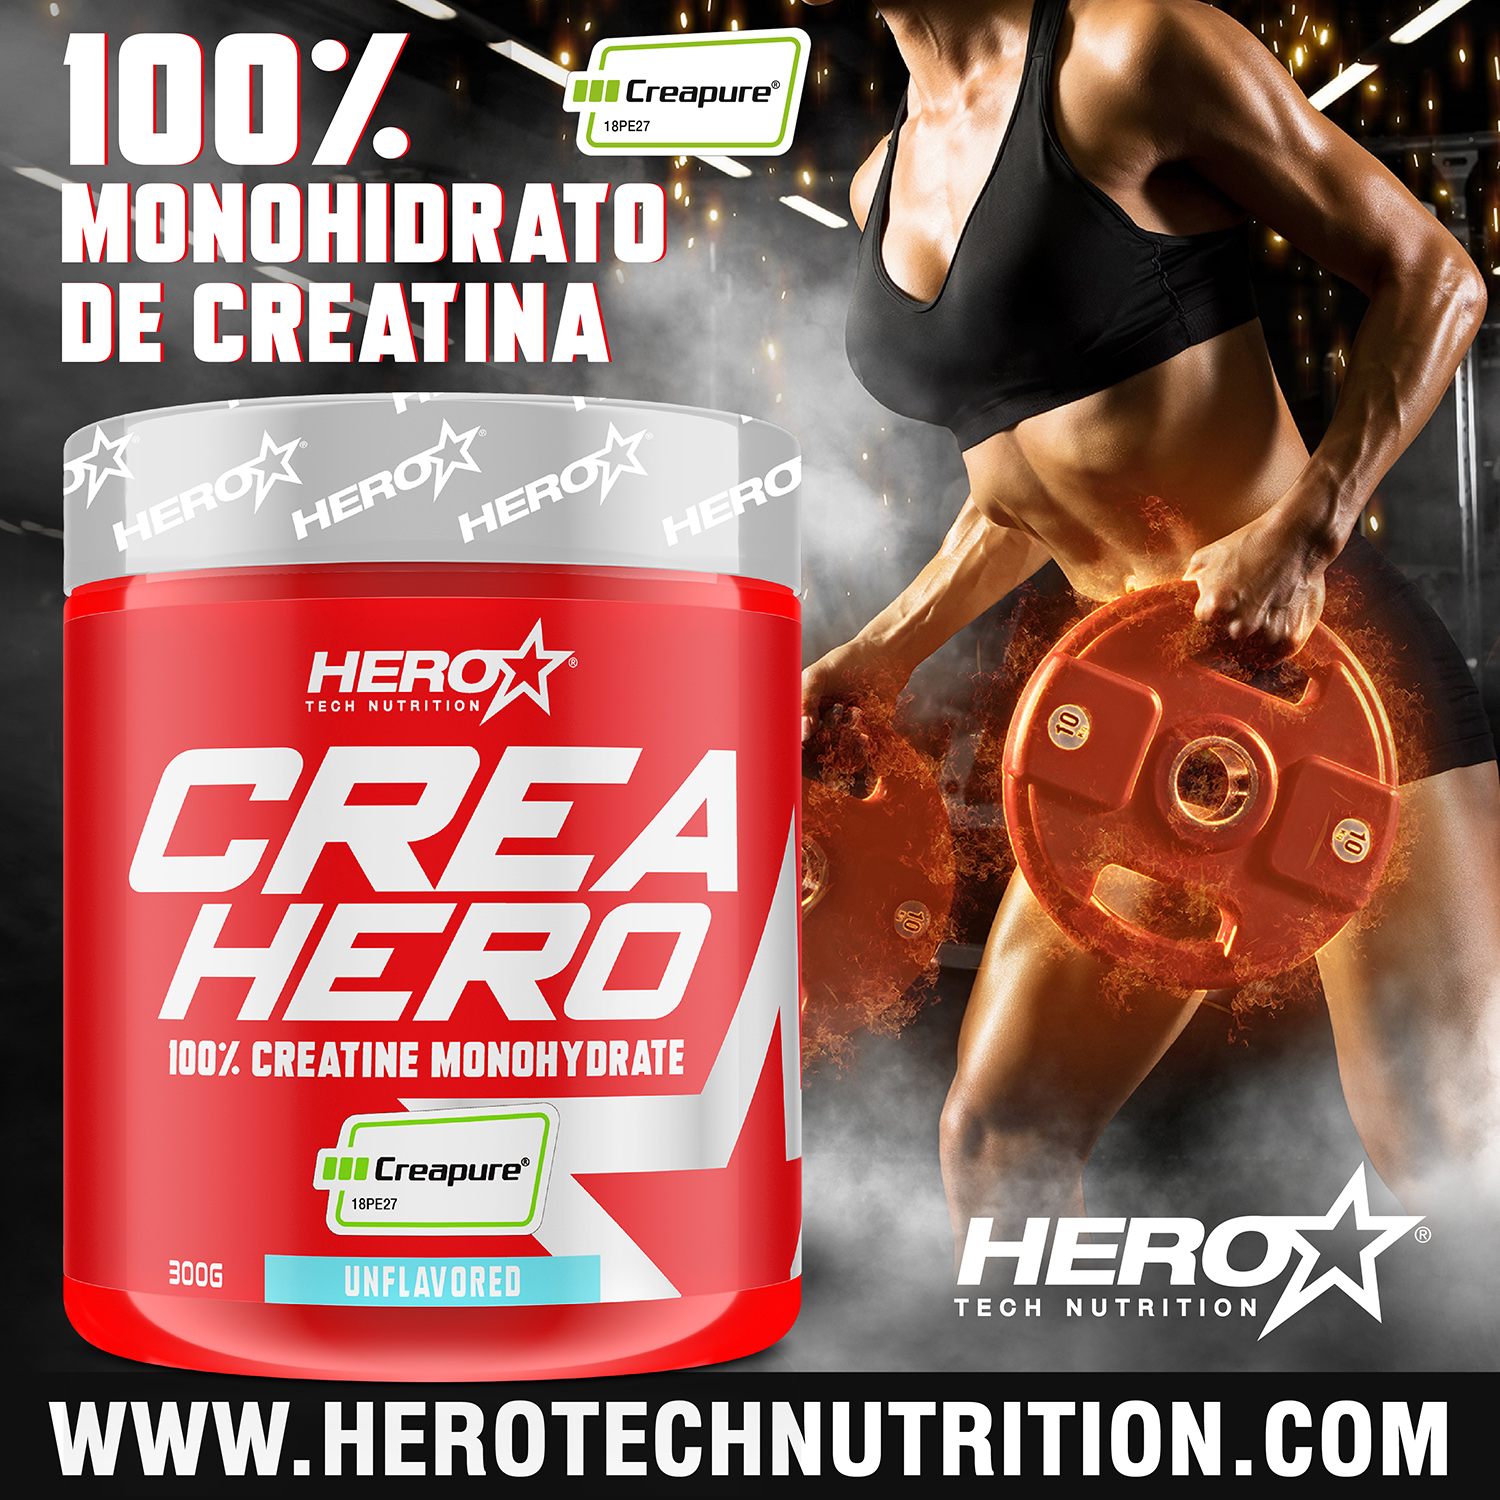 CREAHERO CREATINA HERO TECH NUTRITION herotechnutrition